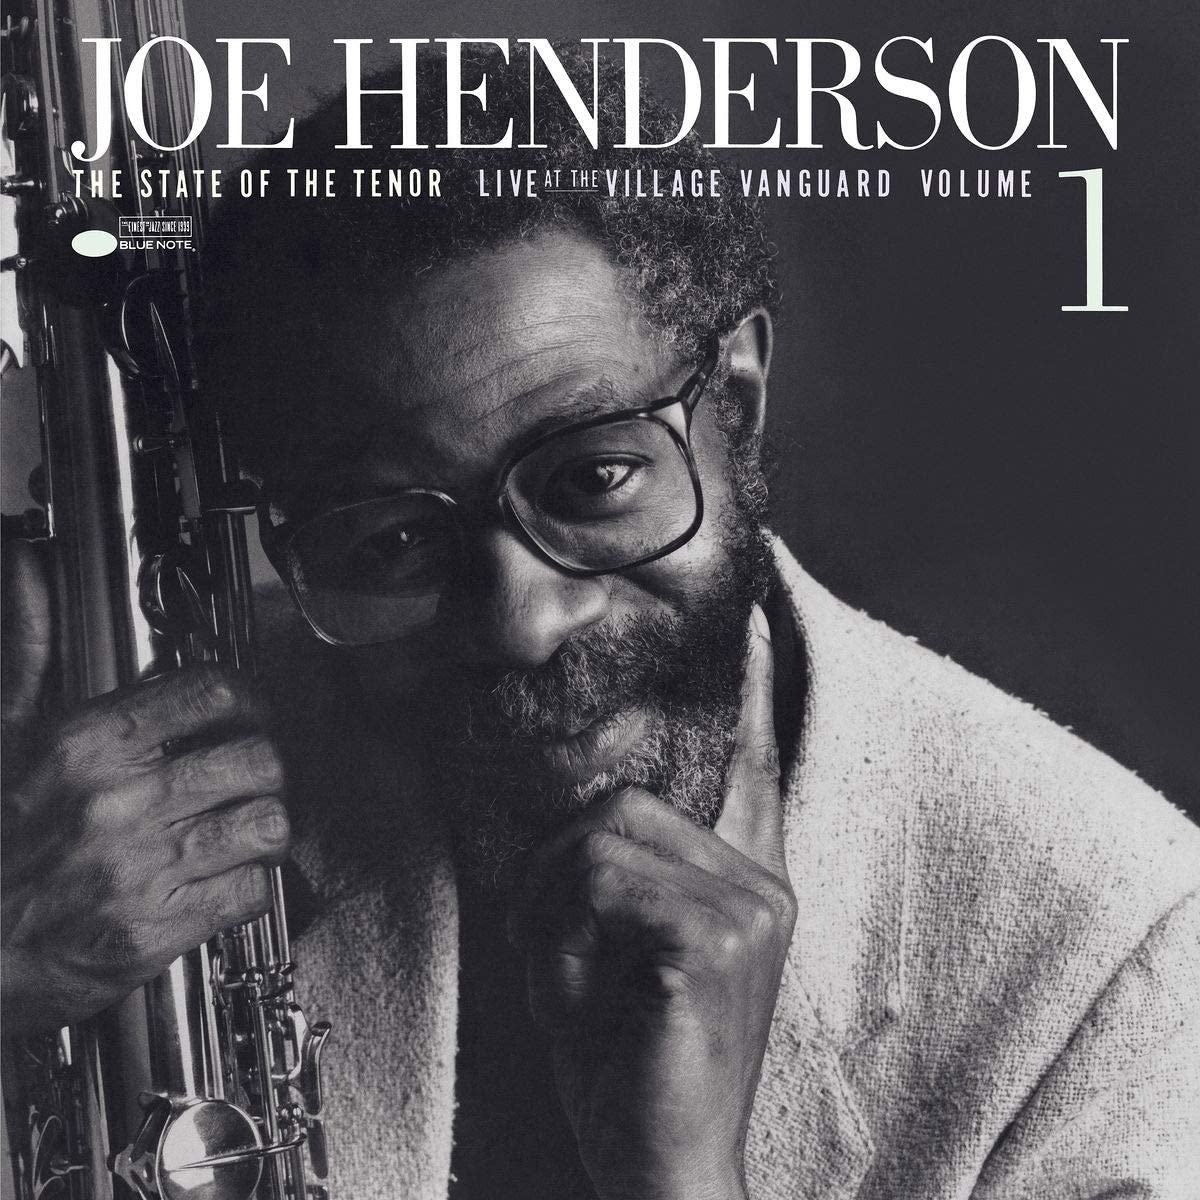 Joe Henderson - The State of the Tenor: Live at the Village Vanguard Vol. 1 (Vinyl LP)